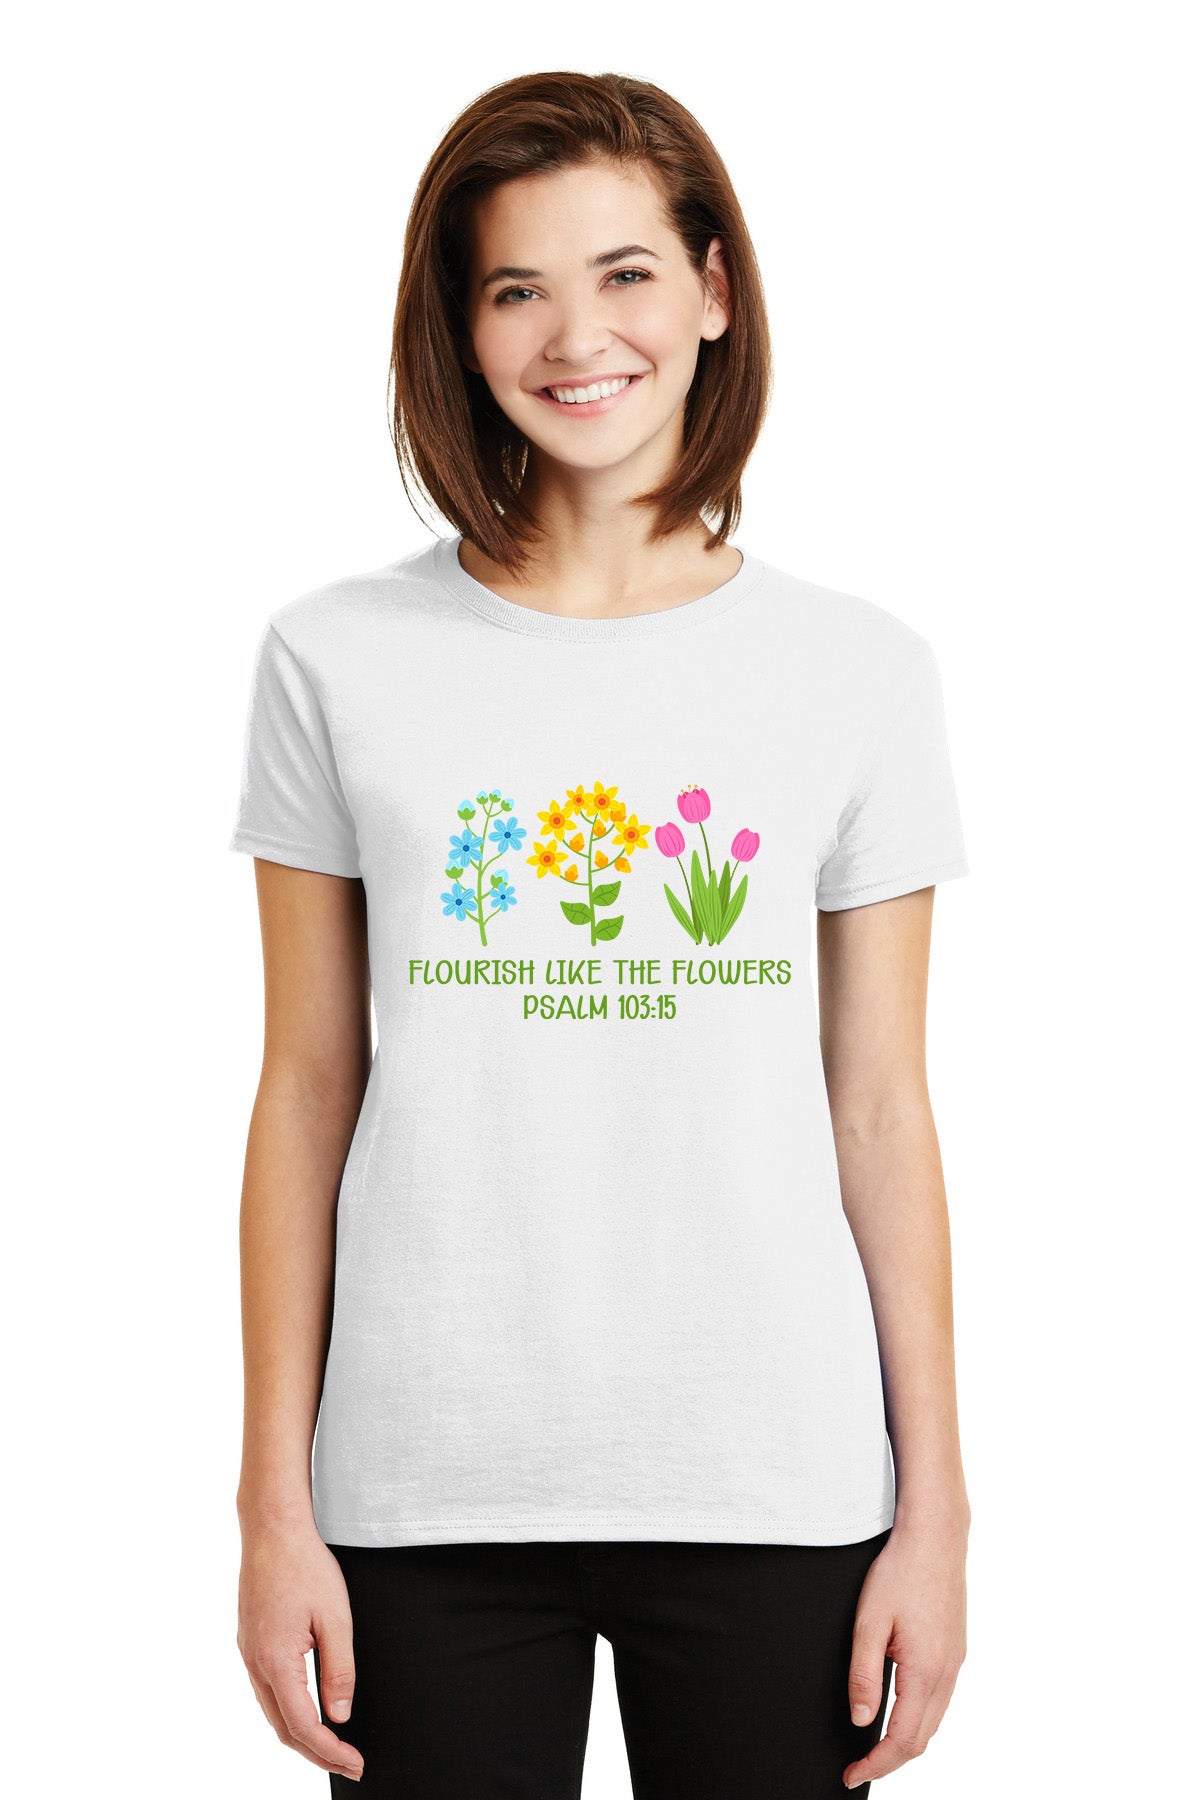 Flourish Like the Flowers Psalm 103:15 T-Shirt